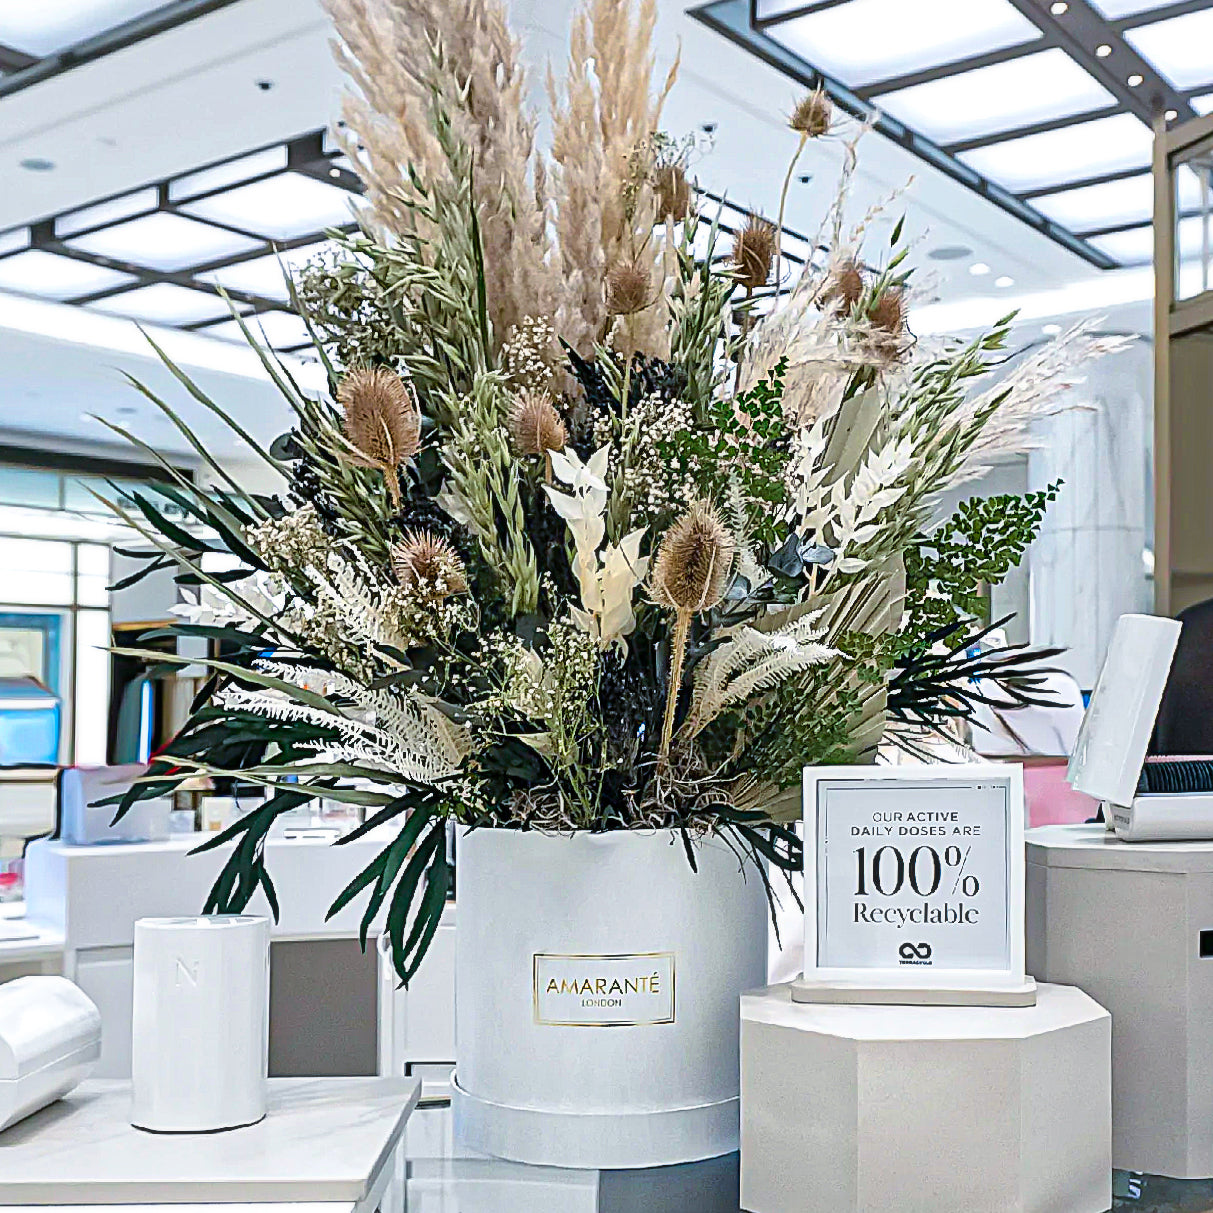 Event florist Amaranté London brought sustainable floral arrangements created with natural colours in mind to Harrod’s London store.